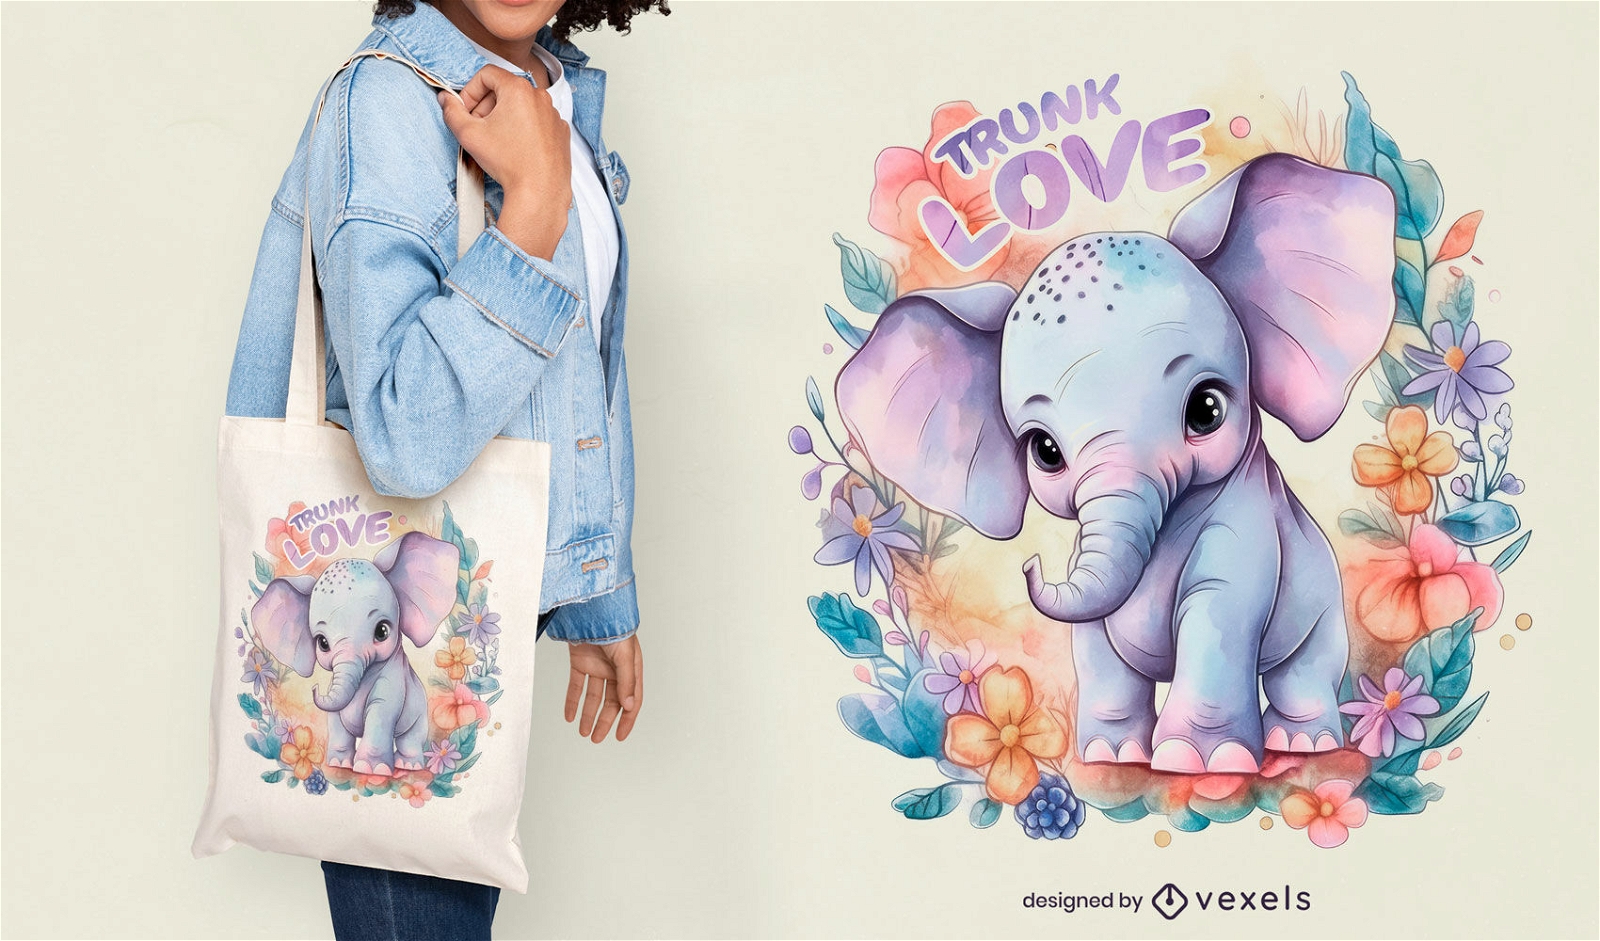 Cute elephant in nature tote bag design